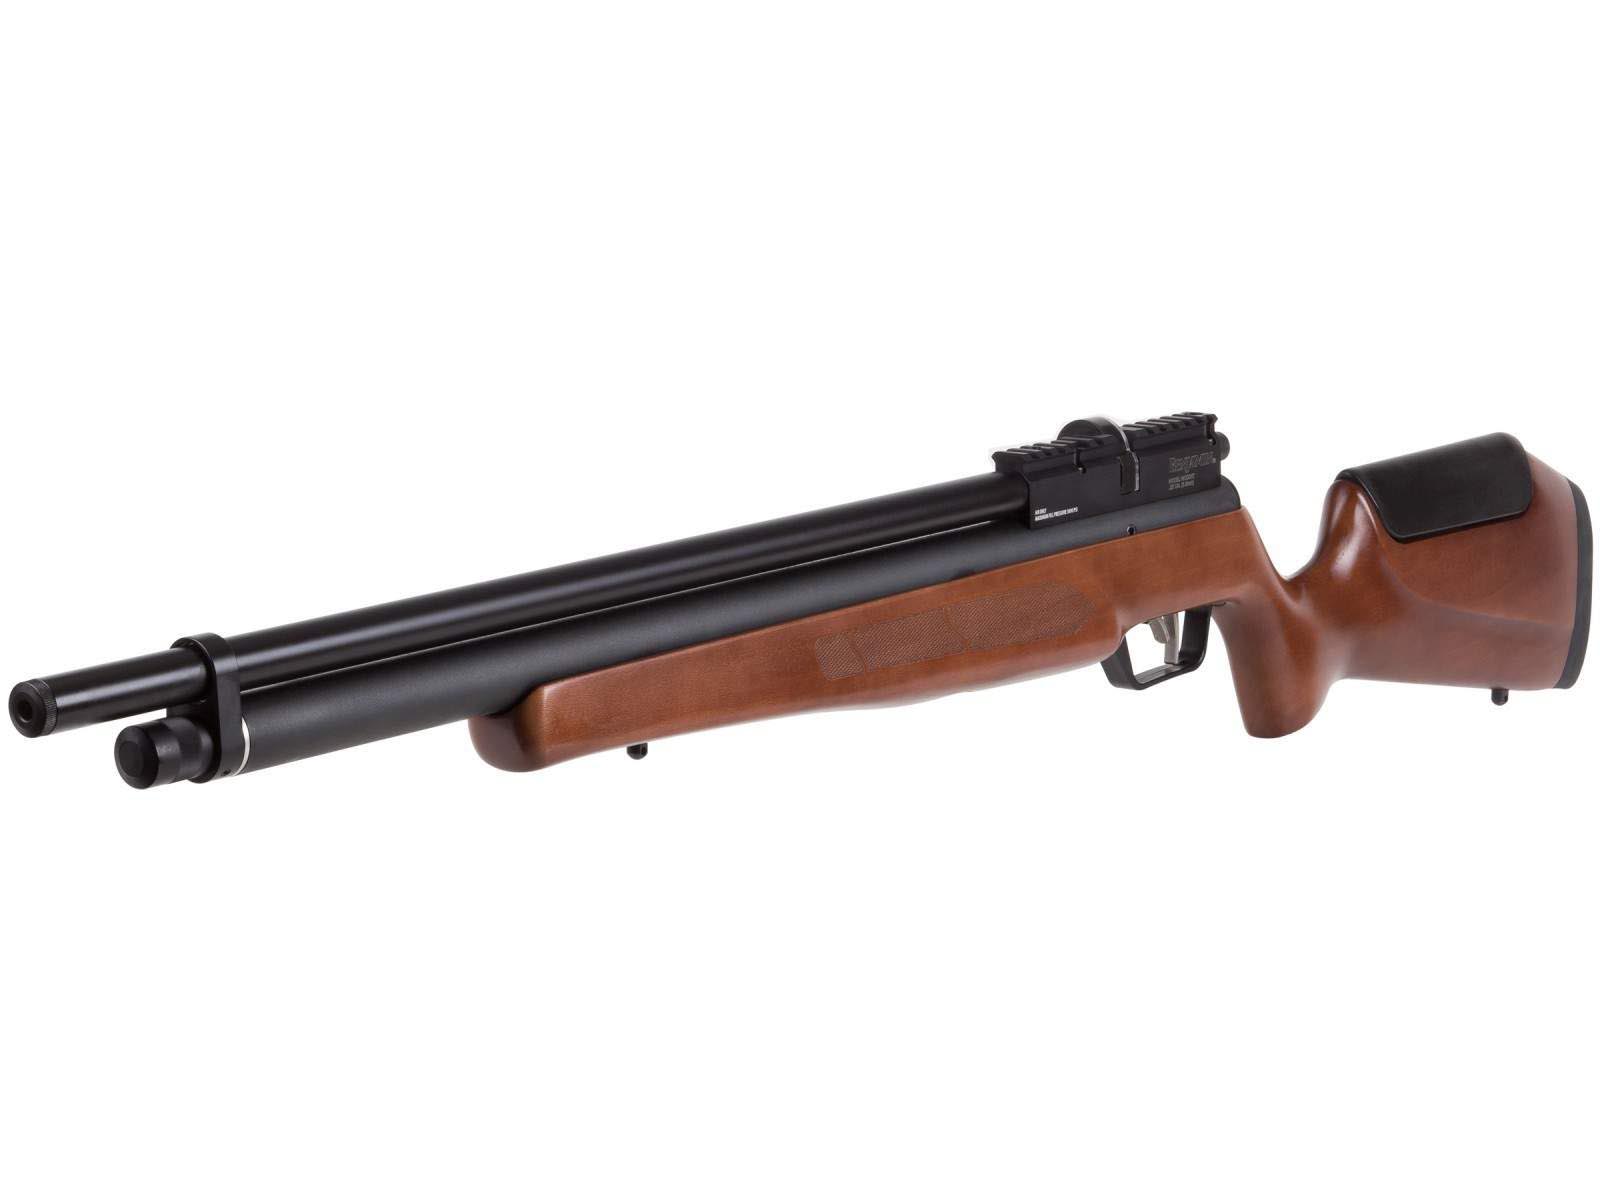 H&n match Pellet Box .177 4.5 mm Air Rifle Pellet Carry Case Target shooting